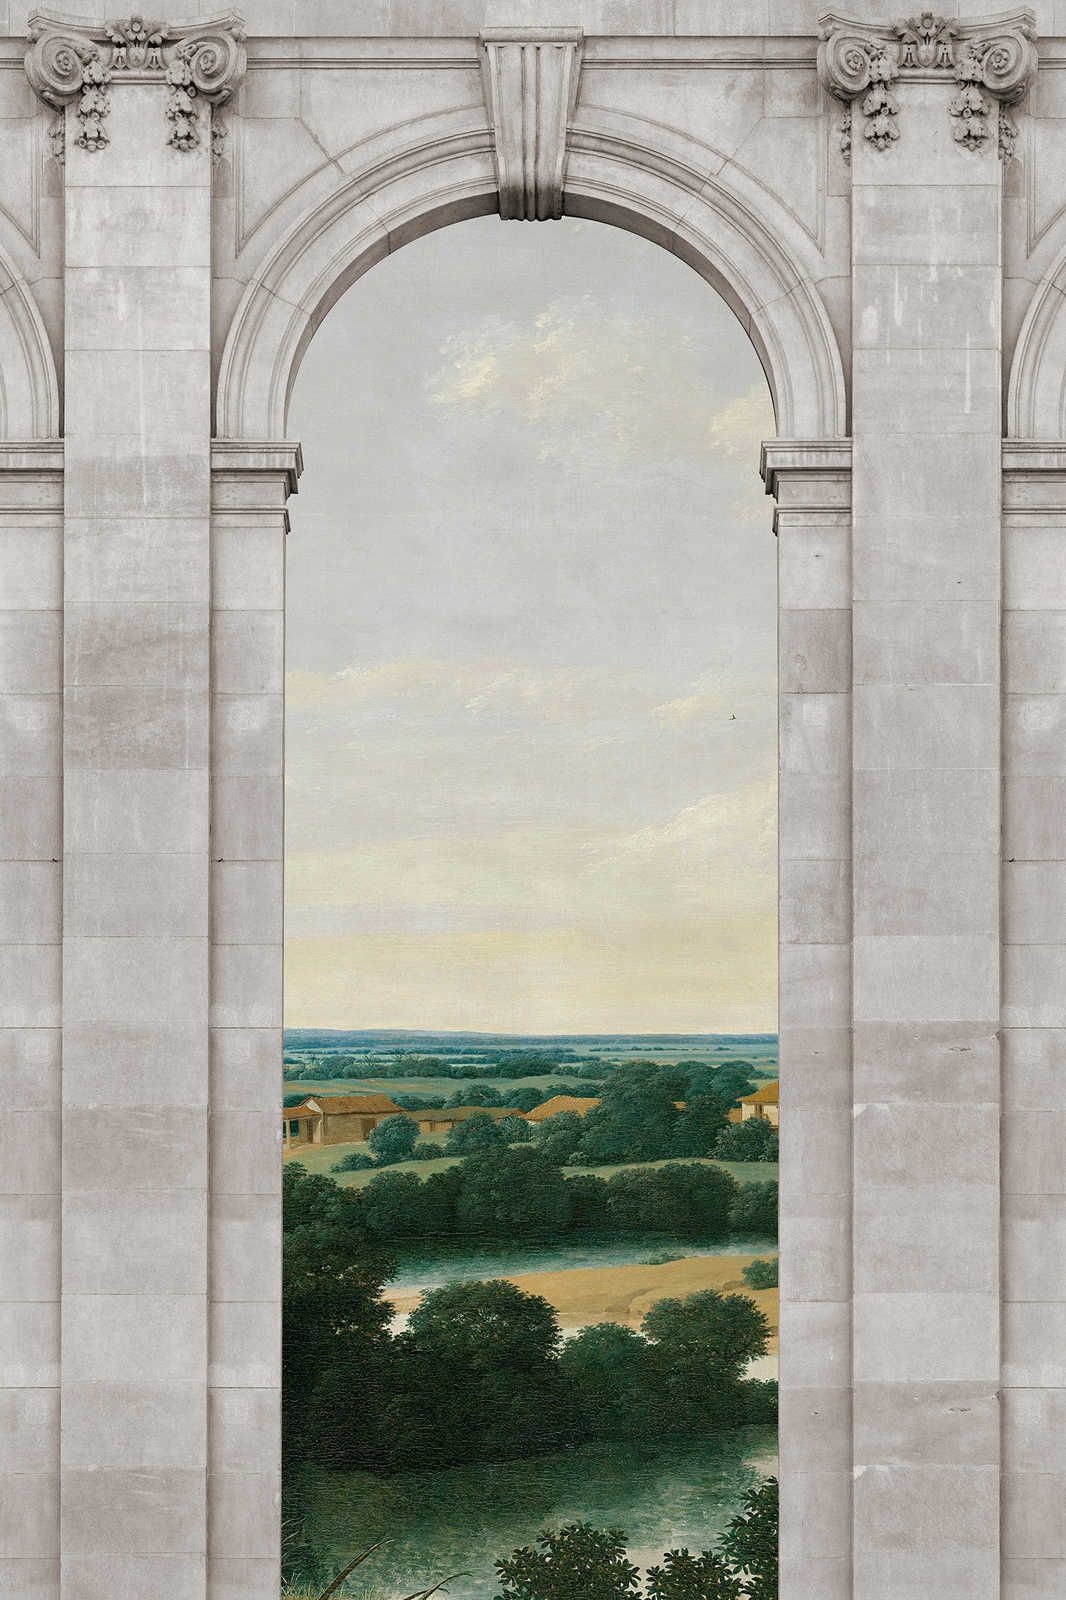             Castello 2 - Fenster Leinwandbild Rundbogen & Ausblick Landschaft – 0,90 m x 0,60 m
        